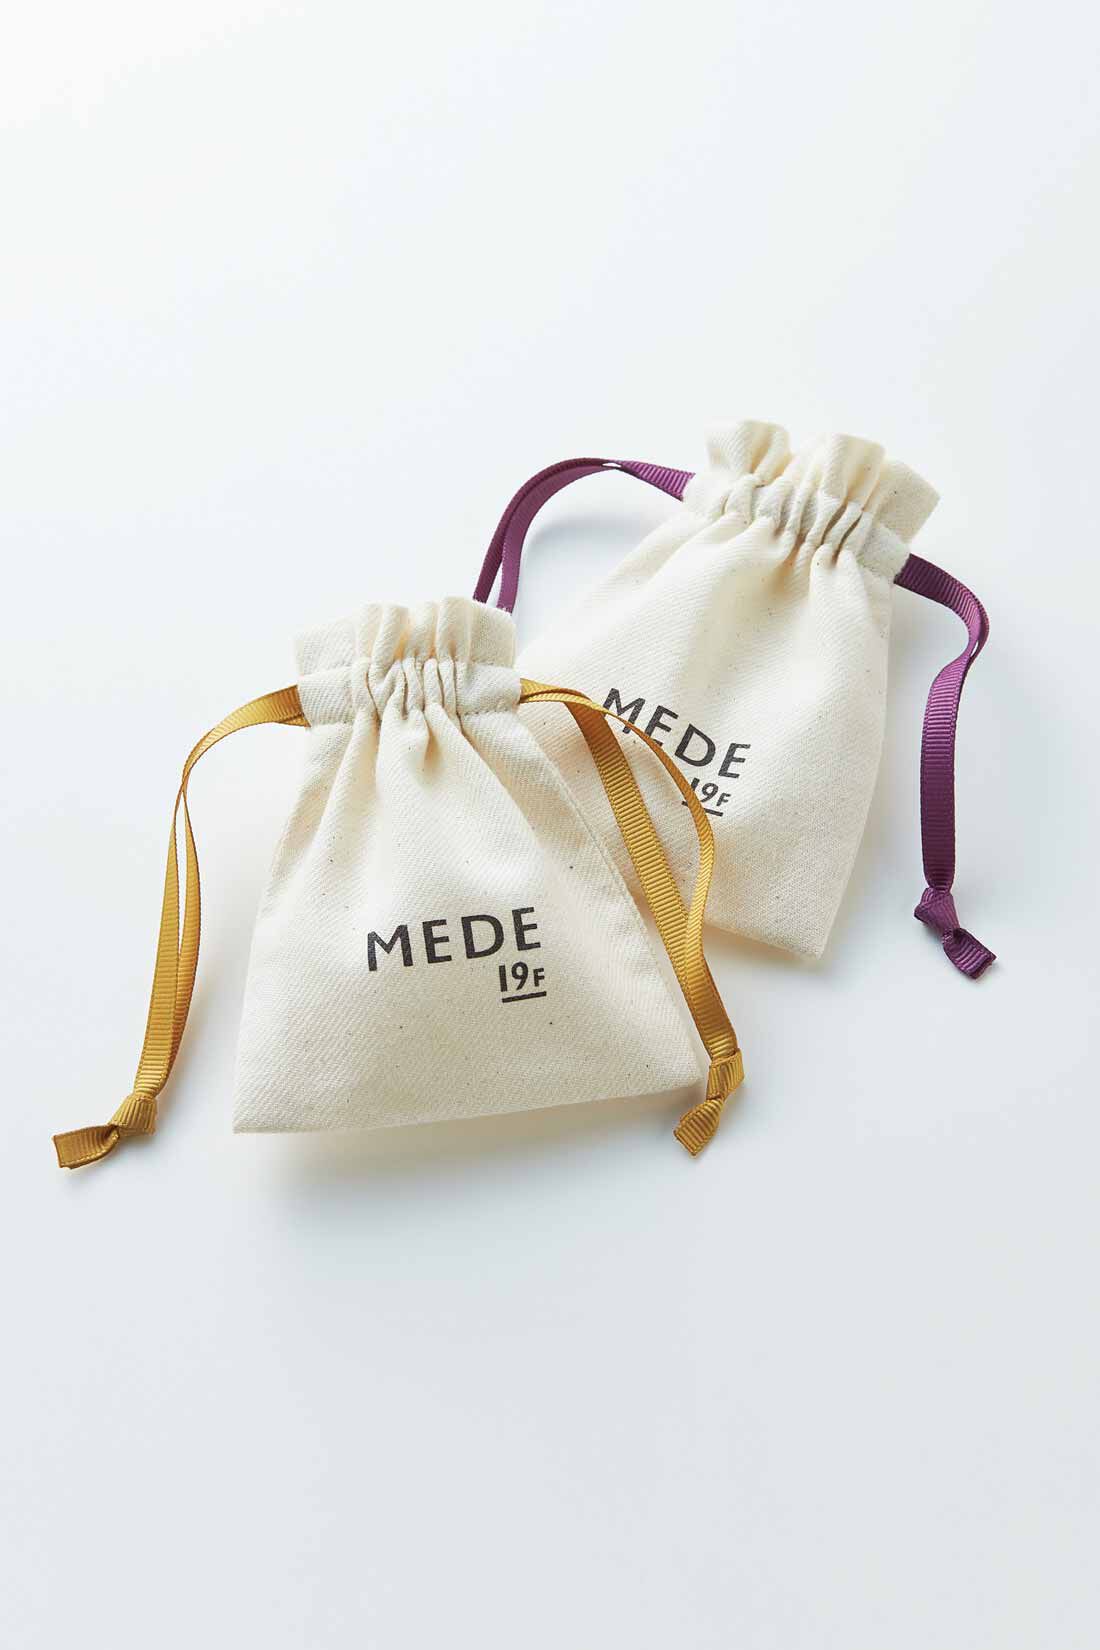 MEDE19F|YPAC for MEDE19F　フランス製陶器ボタンイヤリング type.04|MEDE19Fオリジナルきんちゃくに入れてお届けします。